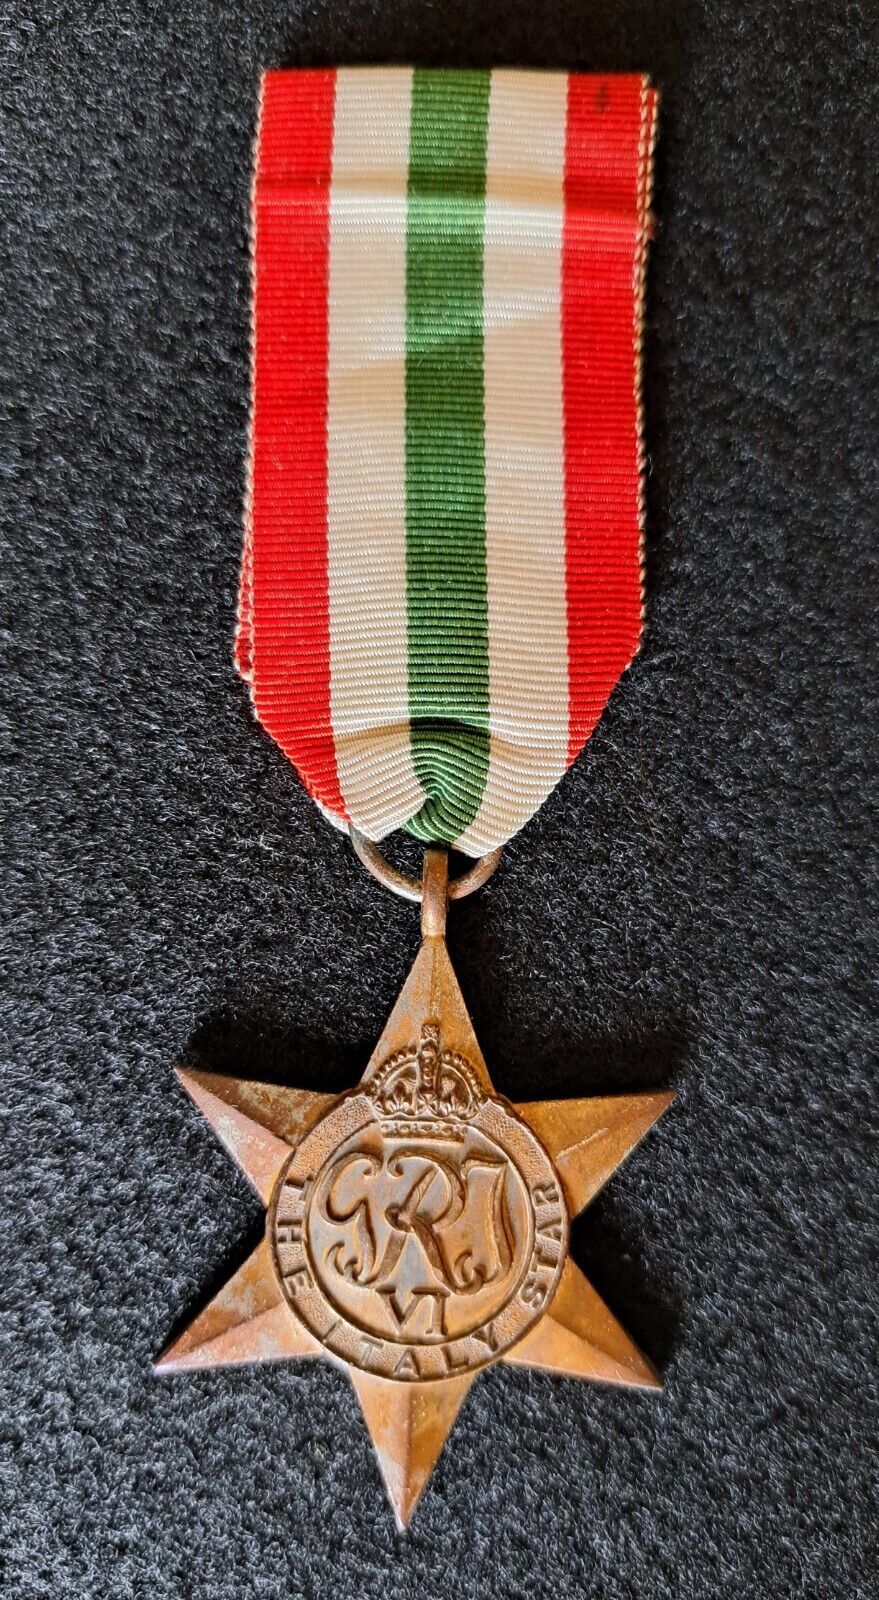 British WWII Italy Star Medal Awarded to Gurkha